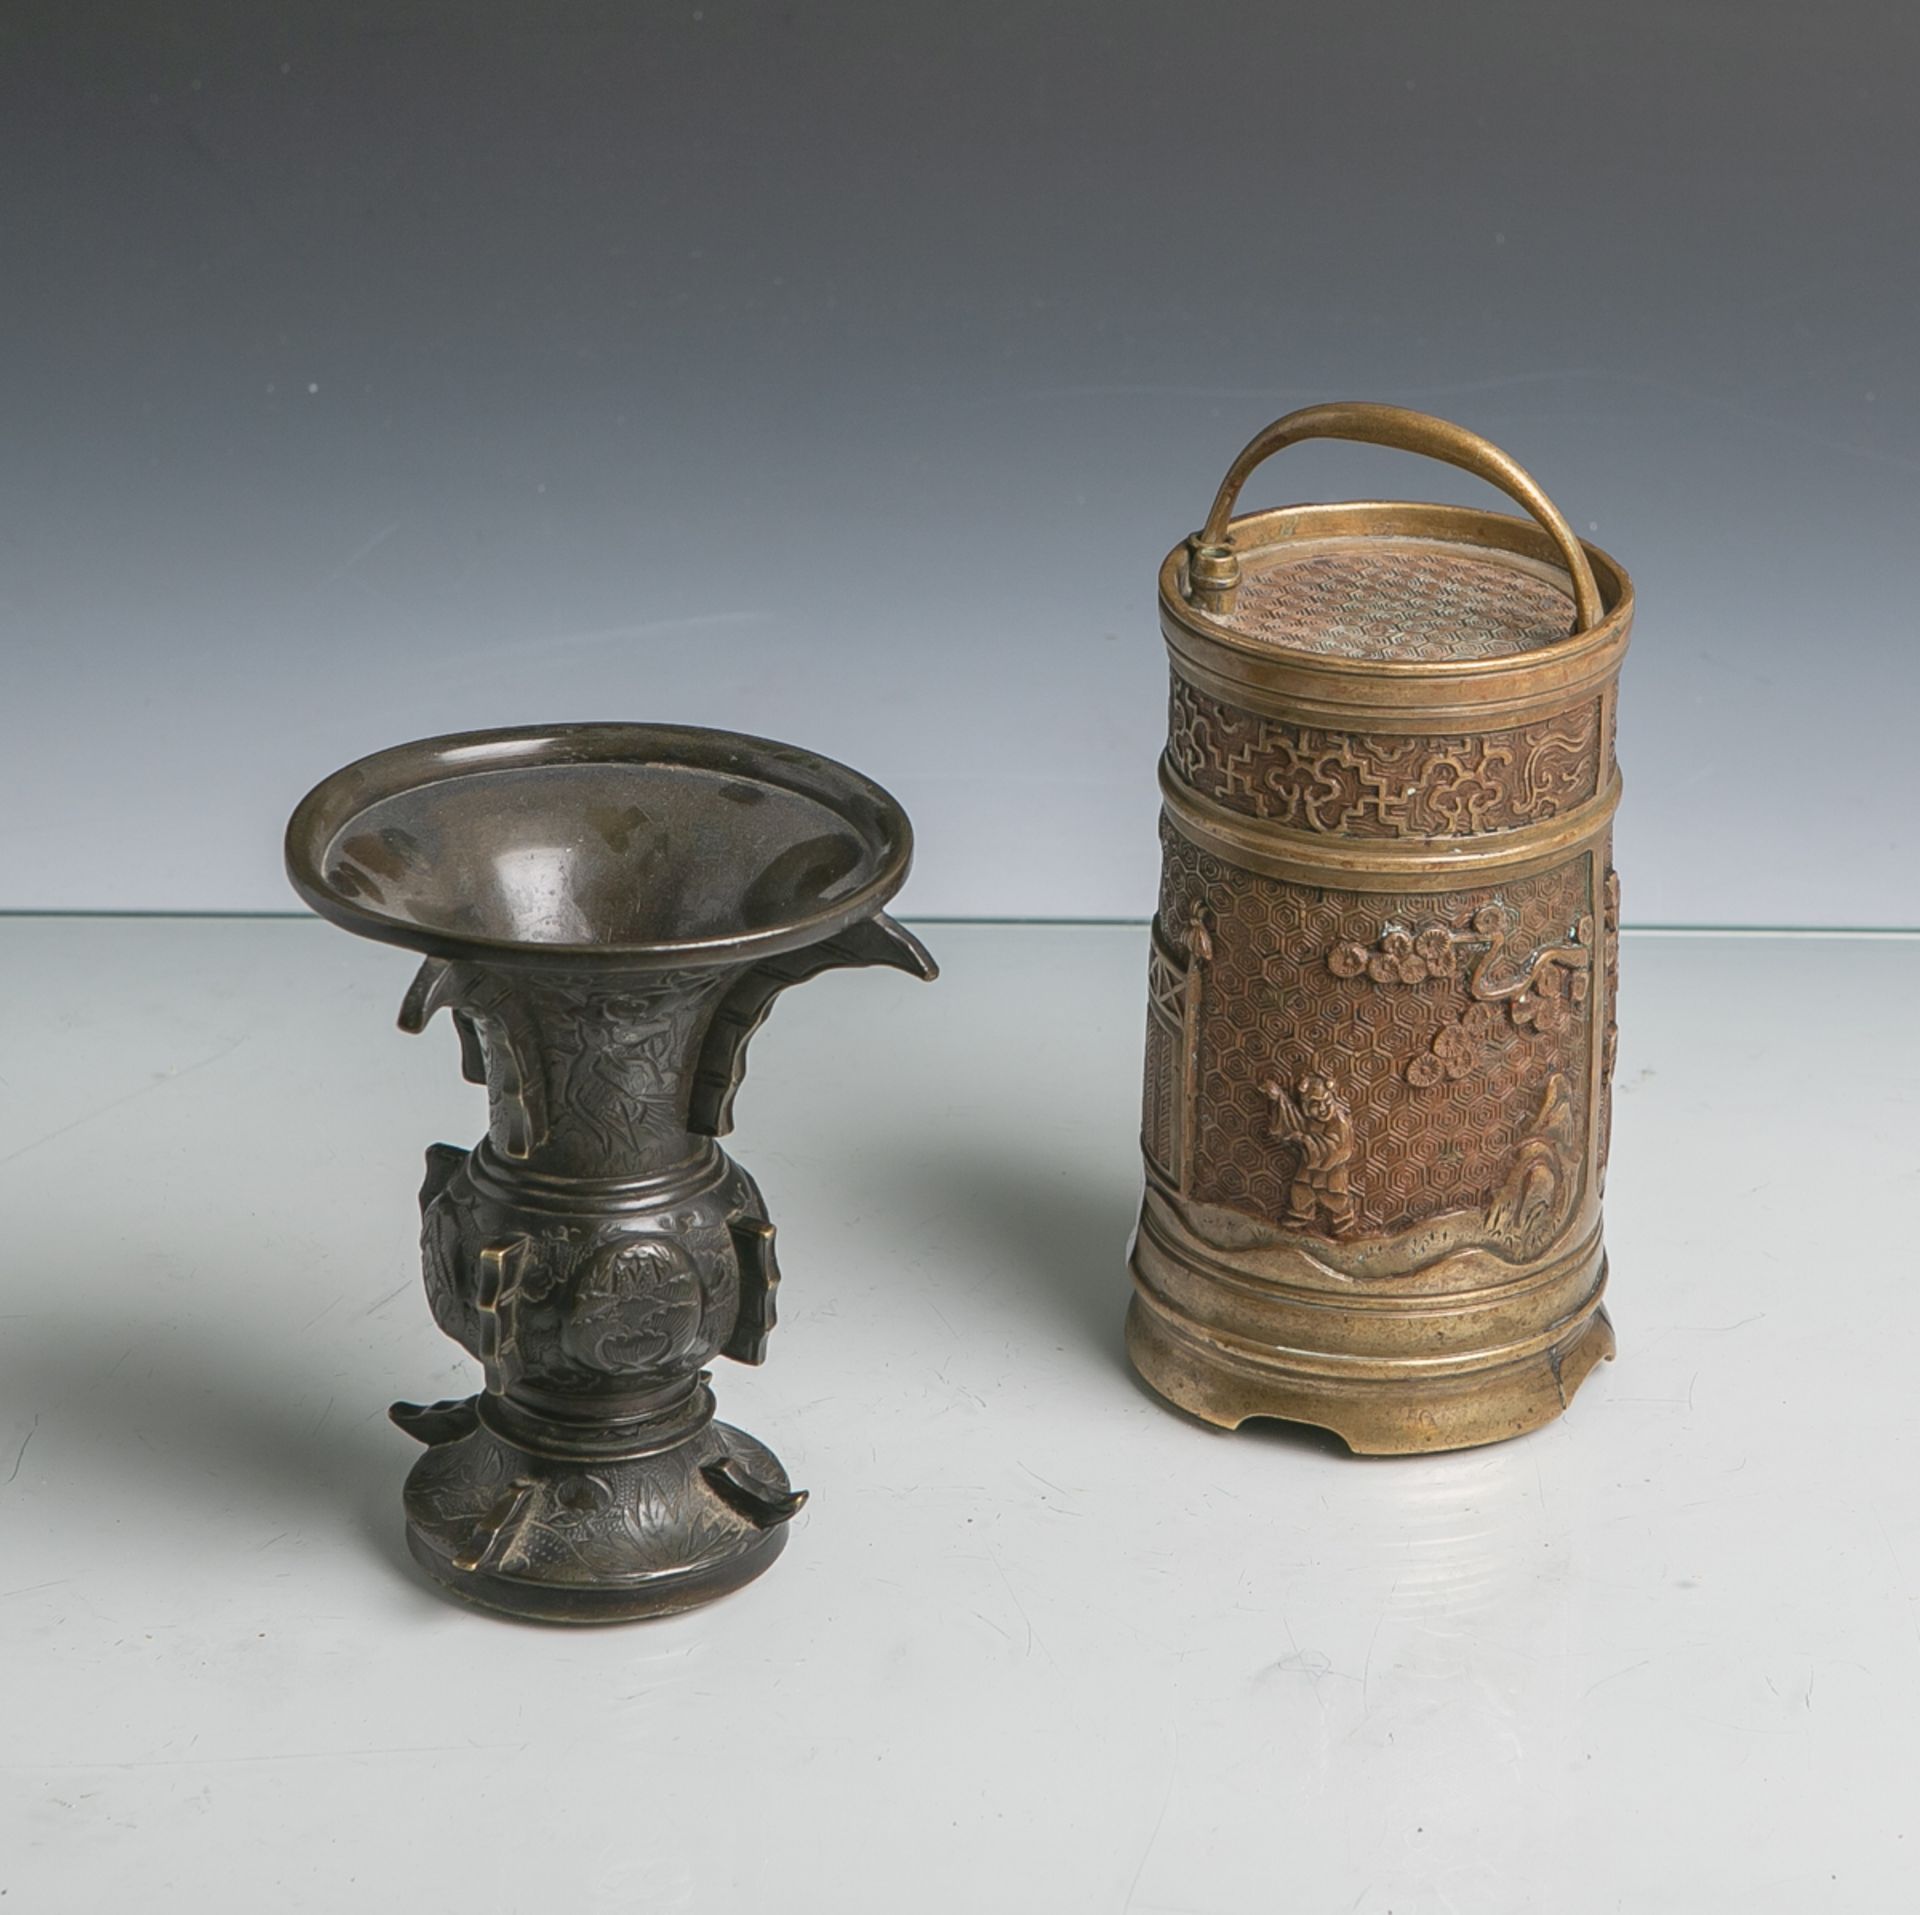 Konvolut von 1 kl. Vase u. 1 Tabakdose (China, 19./20. Jahrhundert), davon 1x Bronze,Floraldekor (